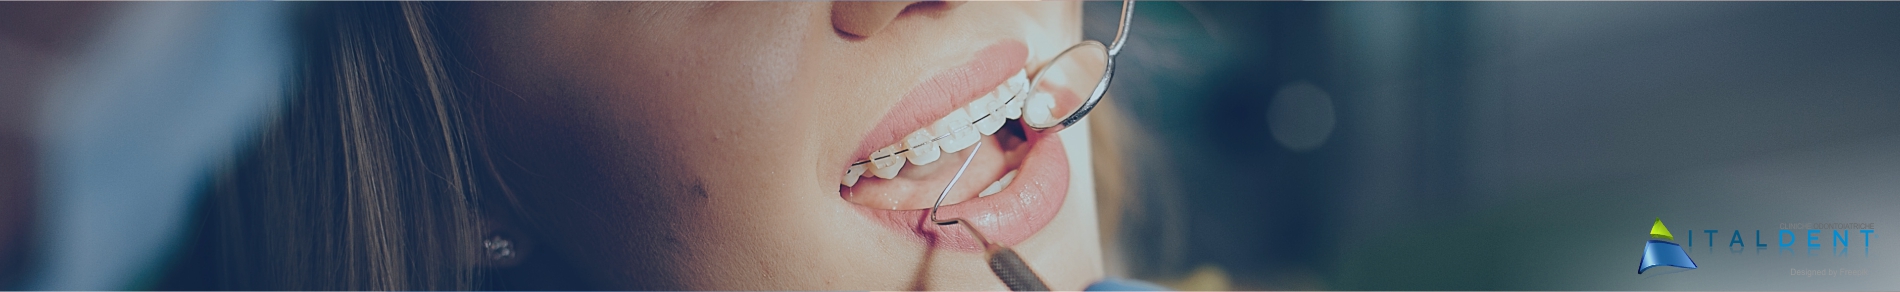 Clinica Odontoiatrica Italdent, Igiene orale